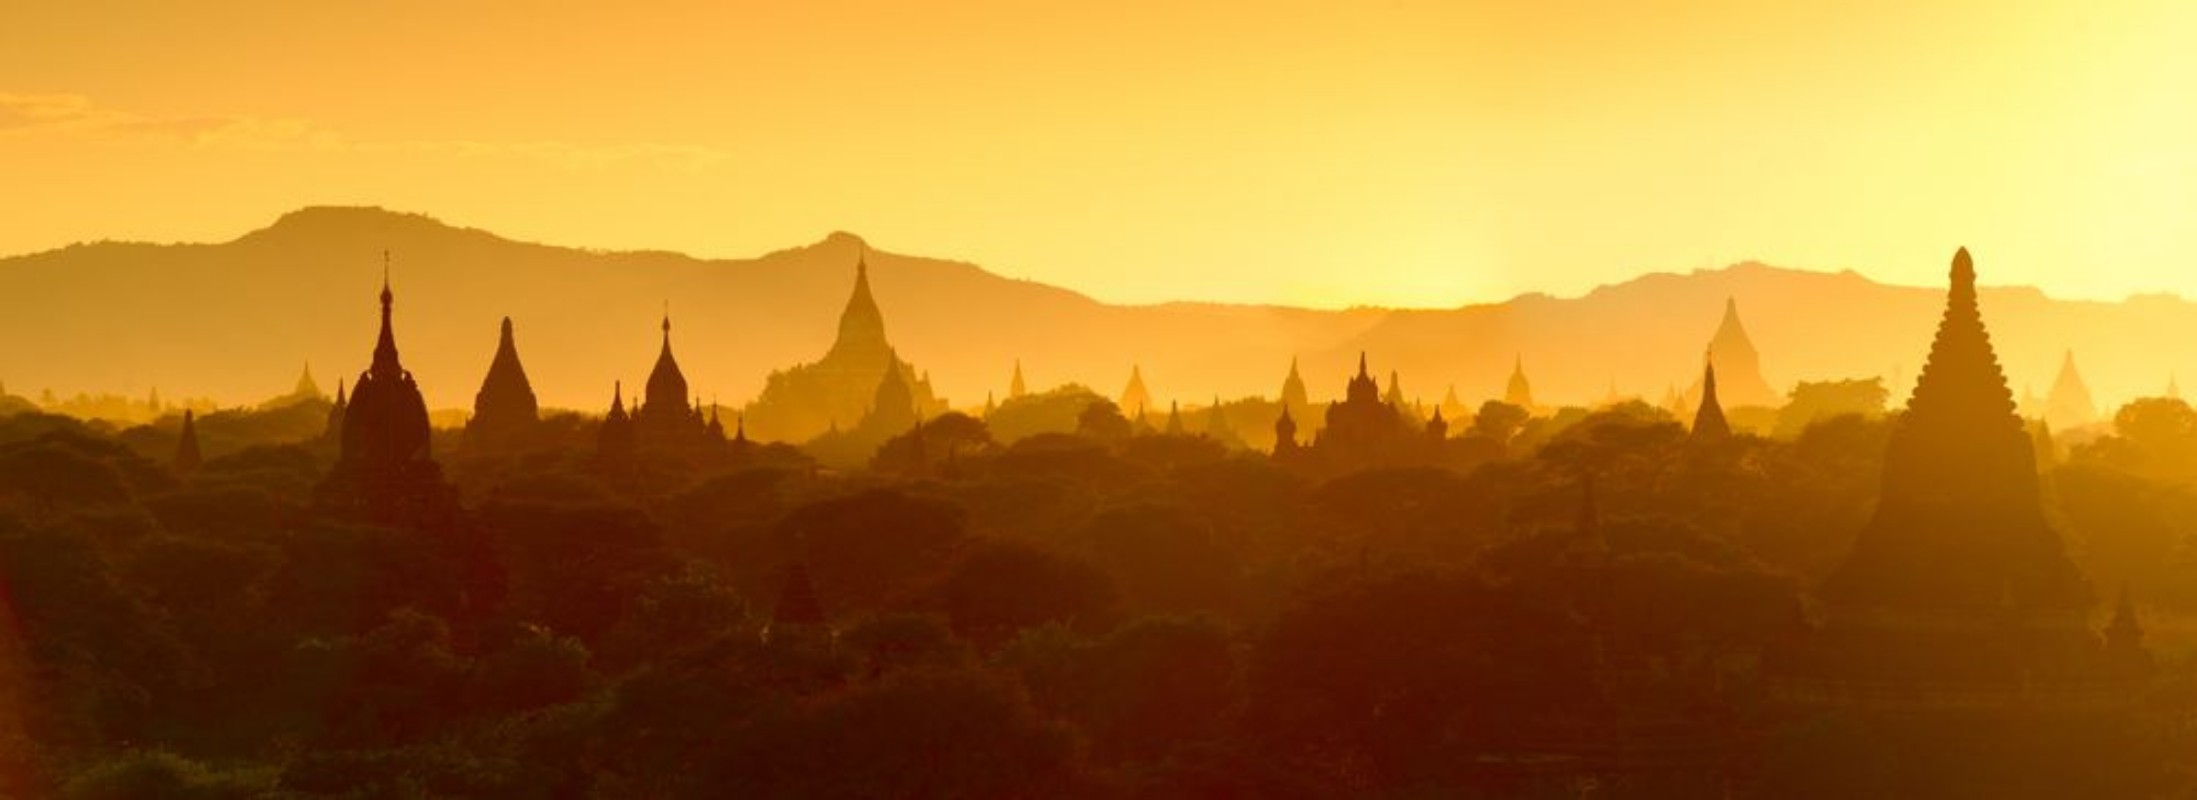 Image de Temples in Bagan